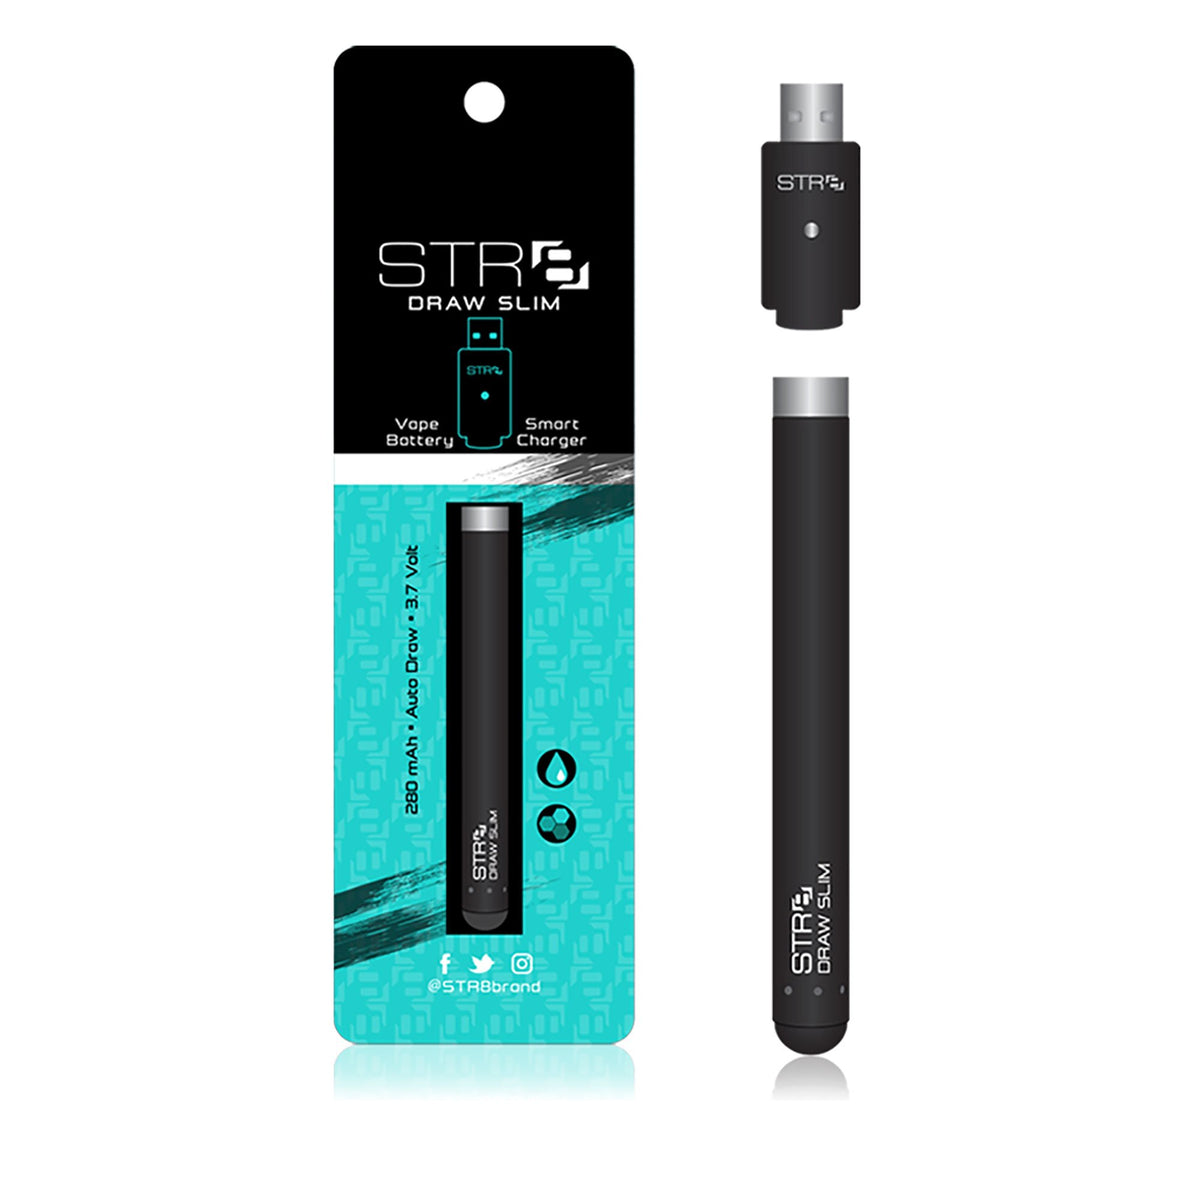 STR8 Auto Draw Slim Black 280mAh Vape Battery w USB Charger